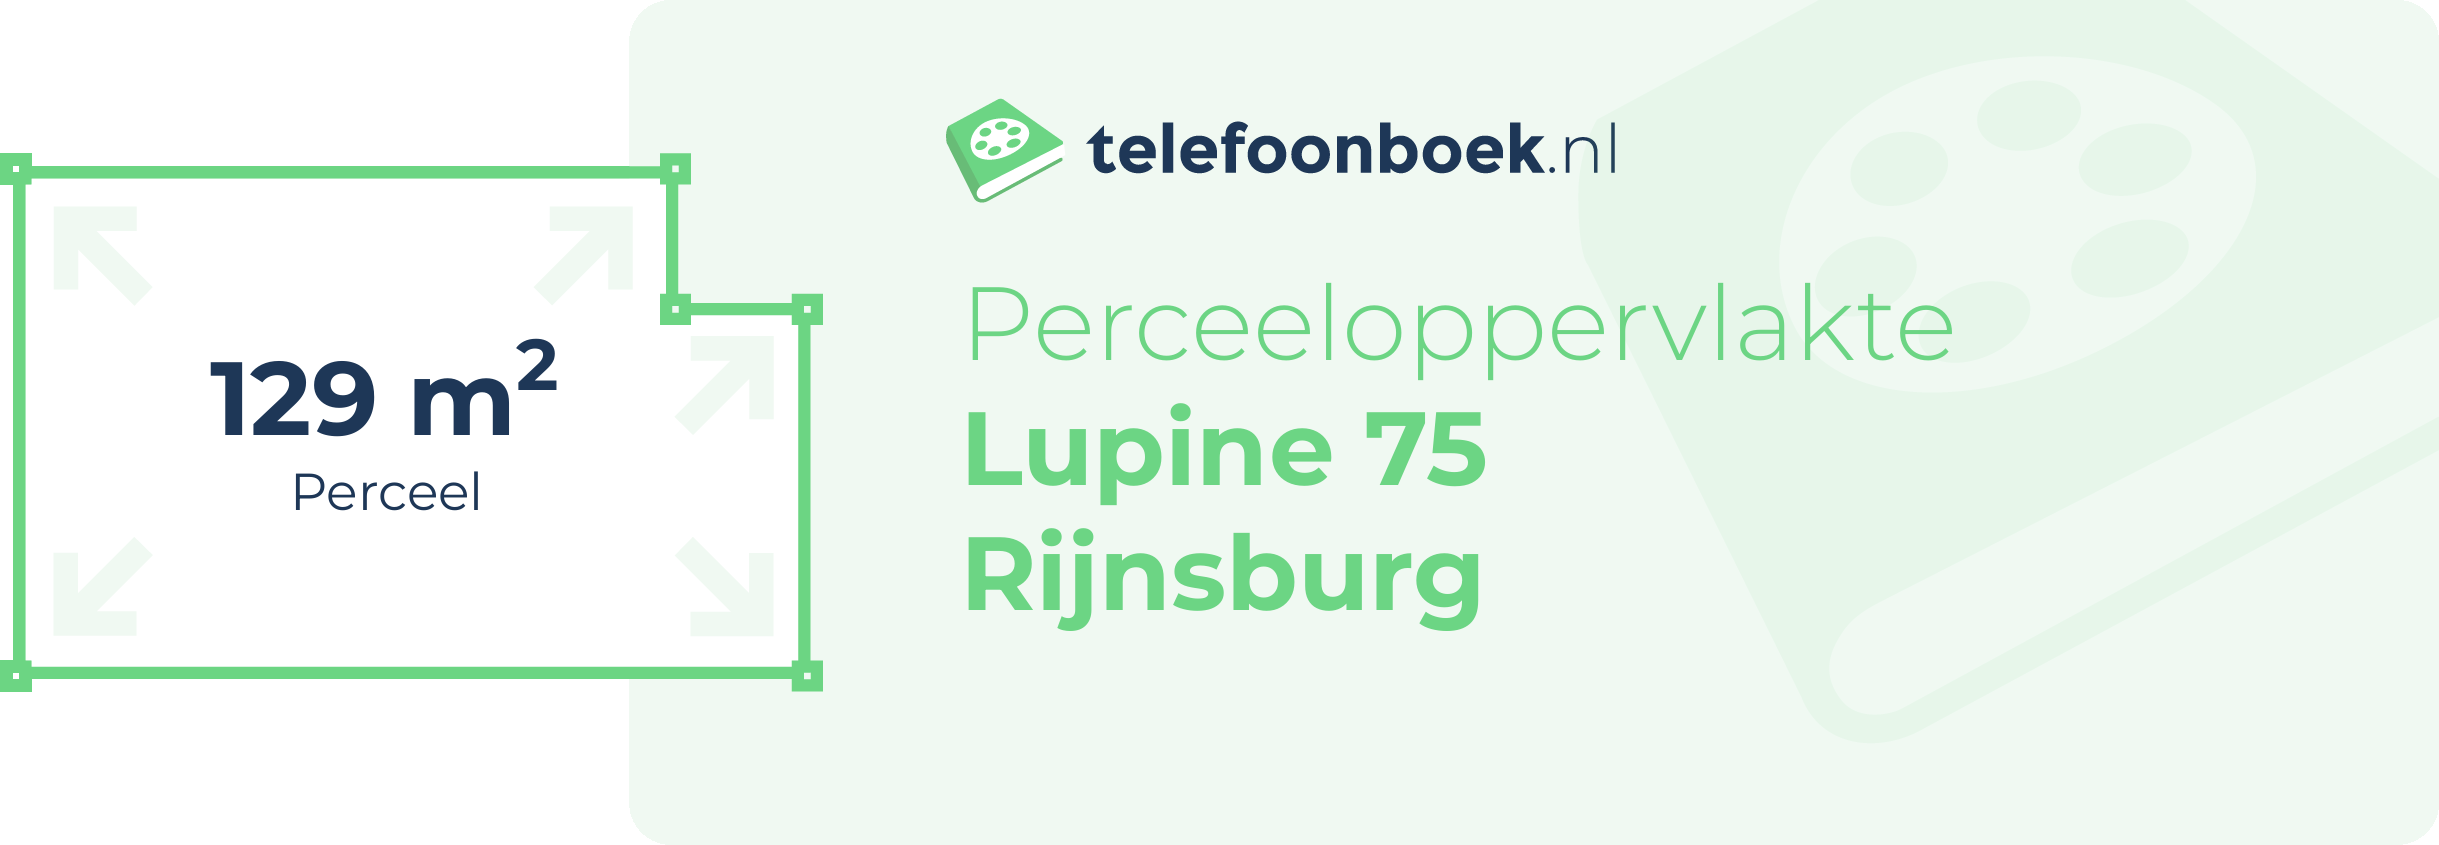 Perceeloppervlakte Lupine 75 Rijnsburg